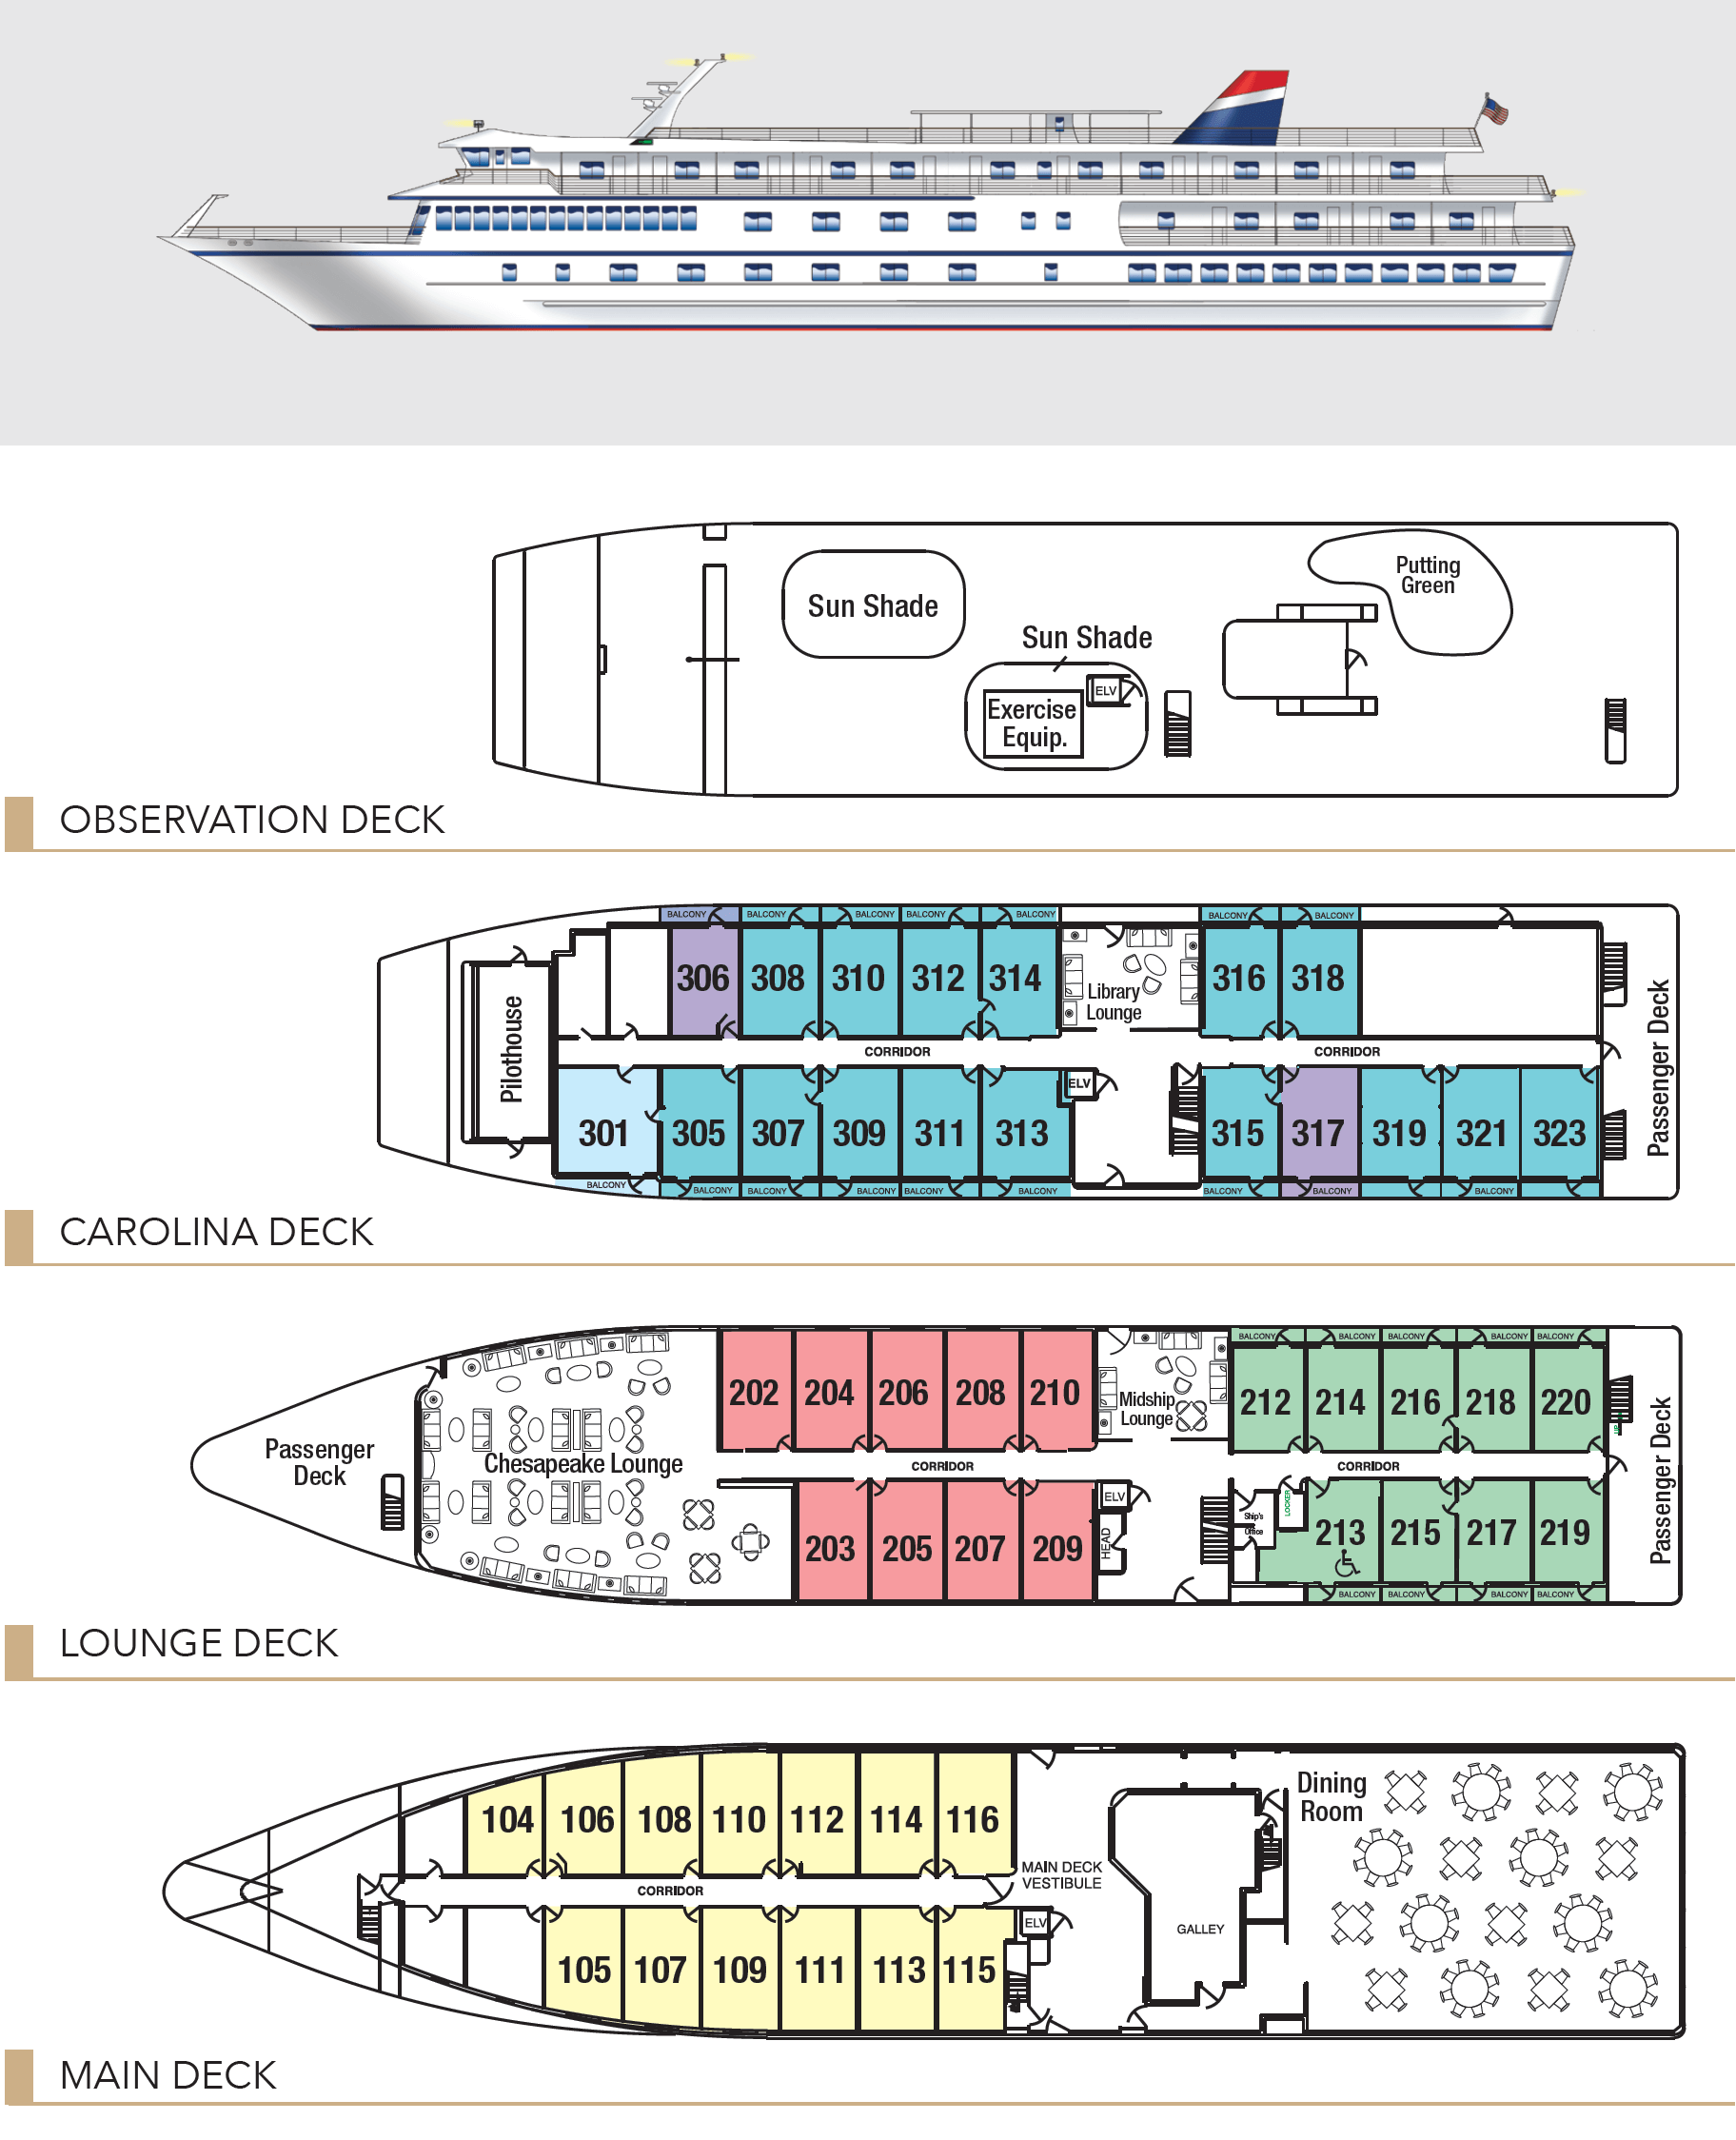 American Star Deck Plan